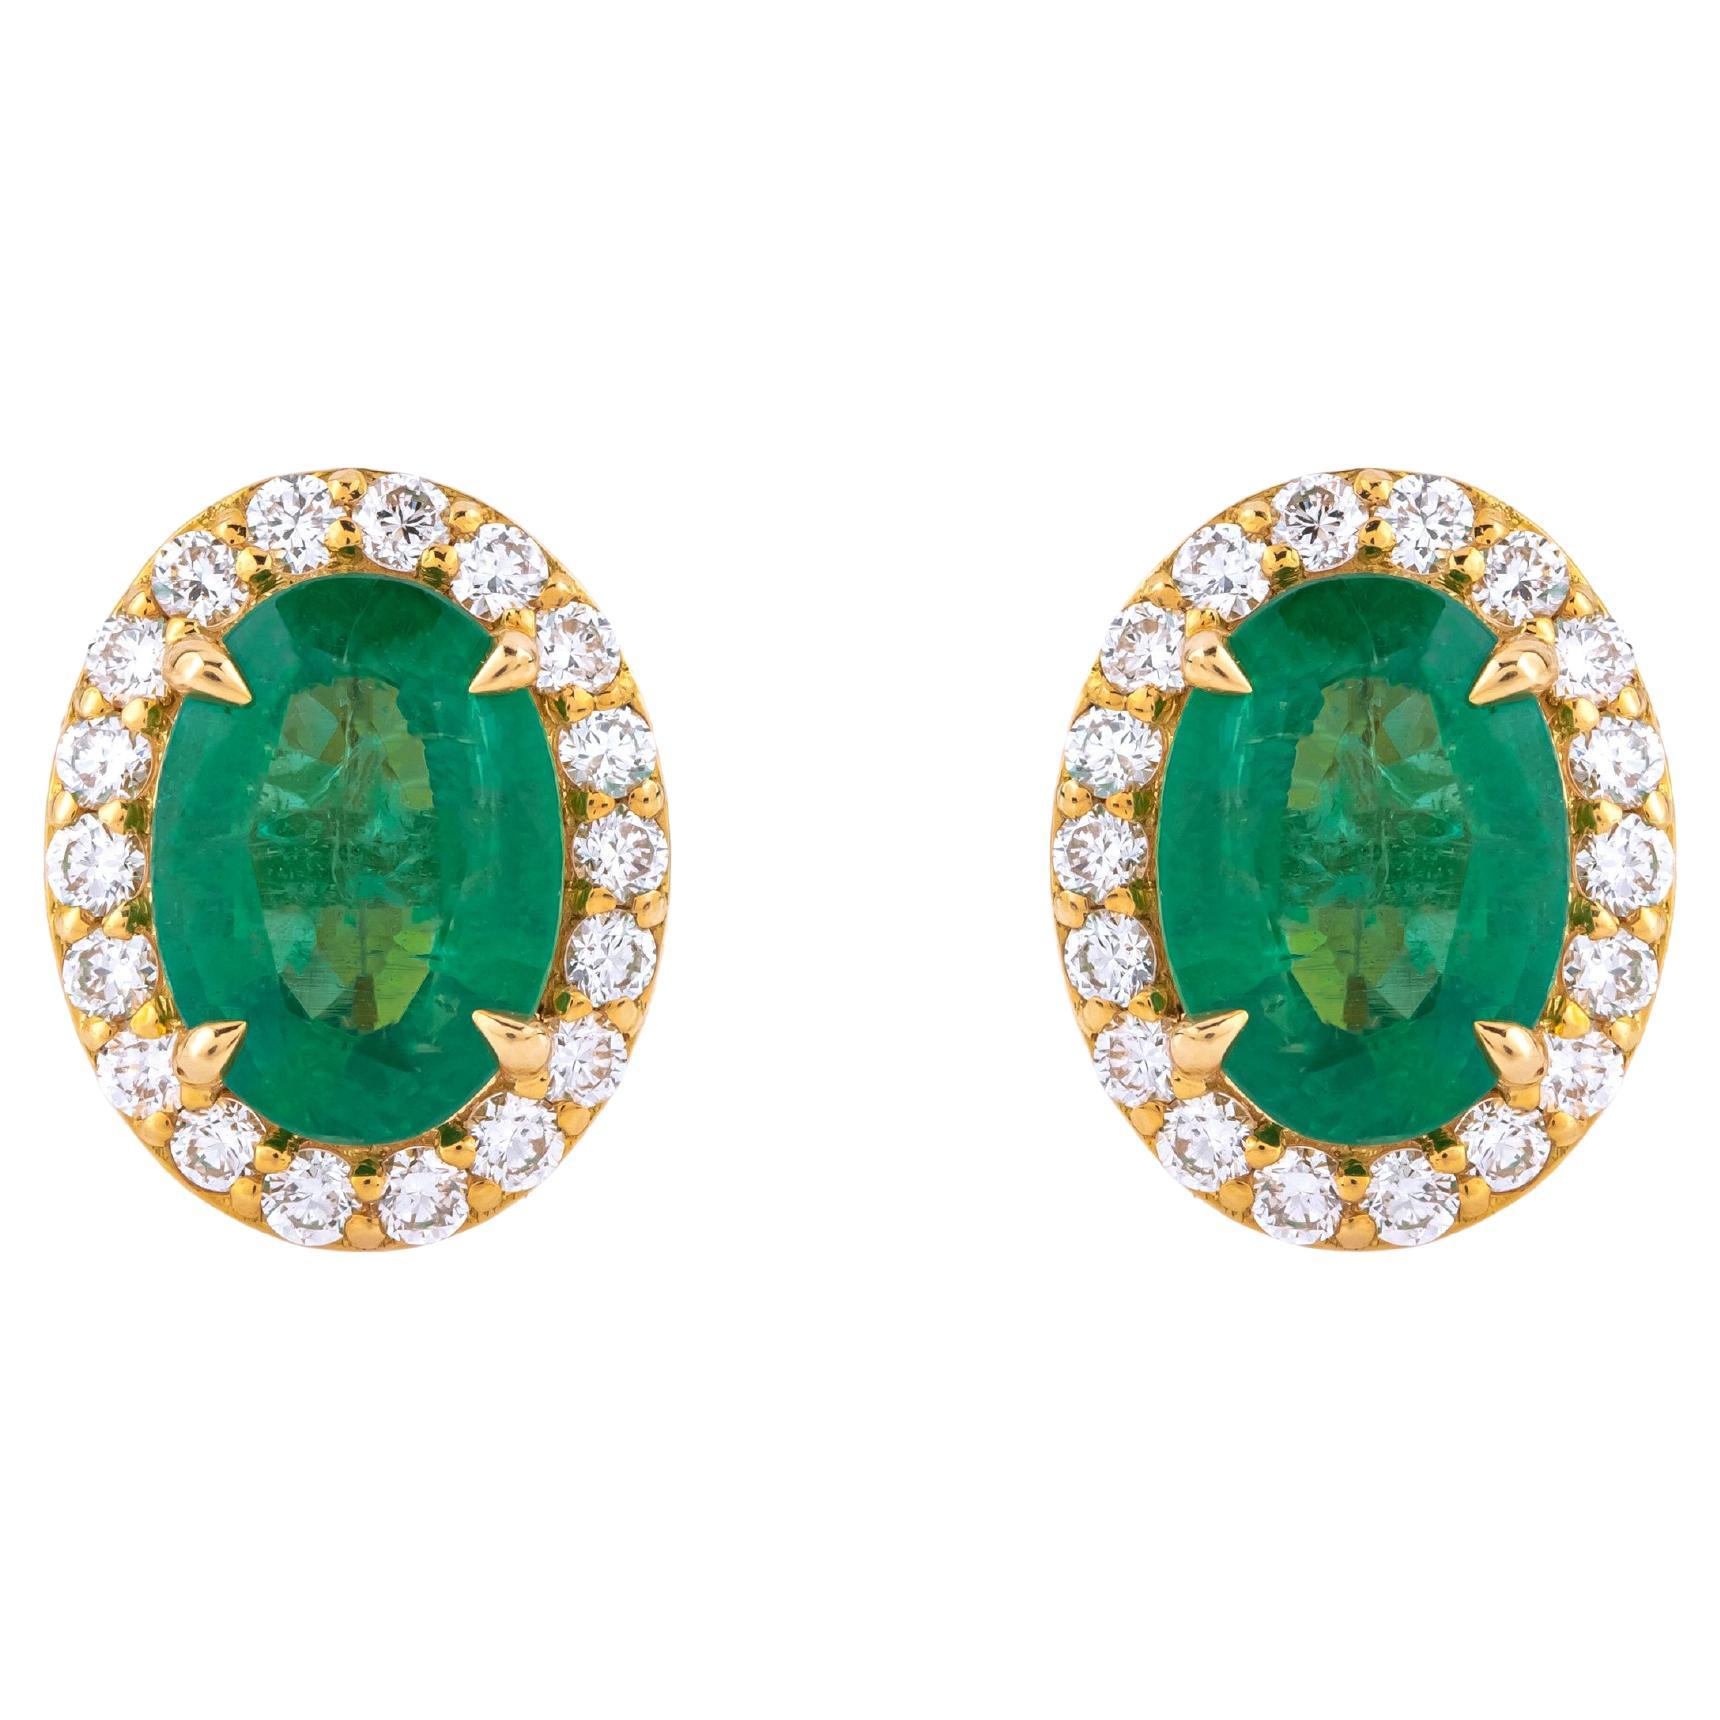 18 Karat Gold 1.51 Carat Emerald & Diamond Stud Earrings